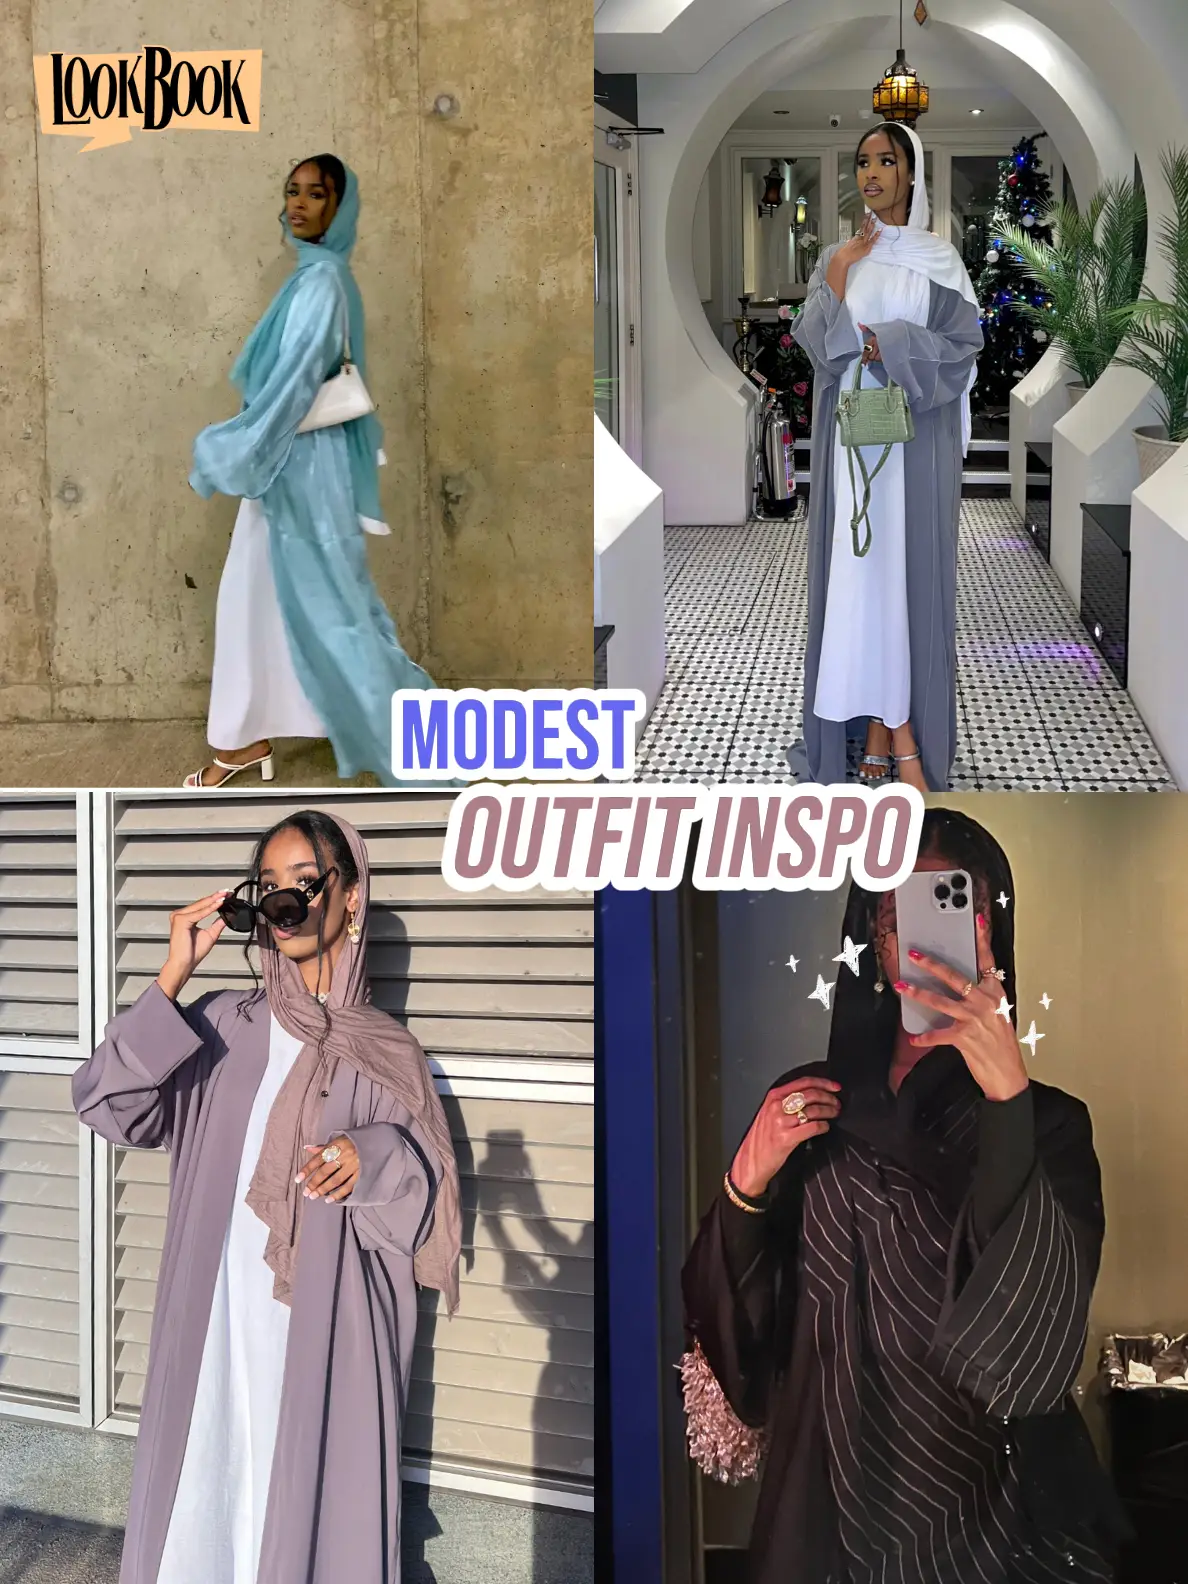 Mariam Shibly Fashion Blog I Style Skims Dress for Classy Fall